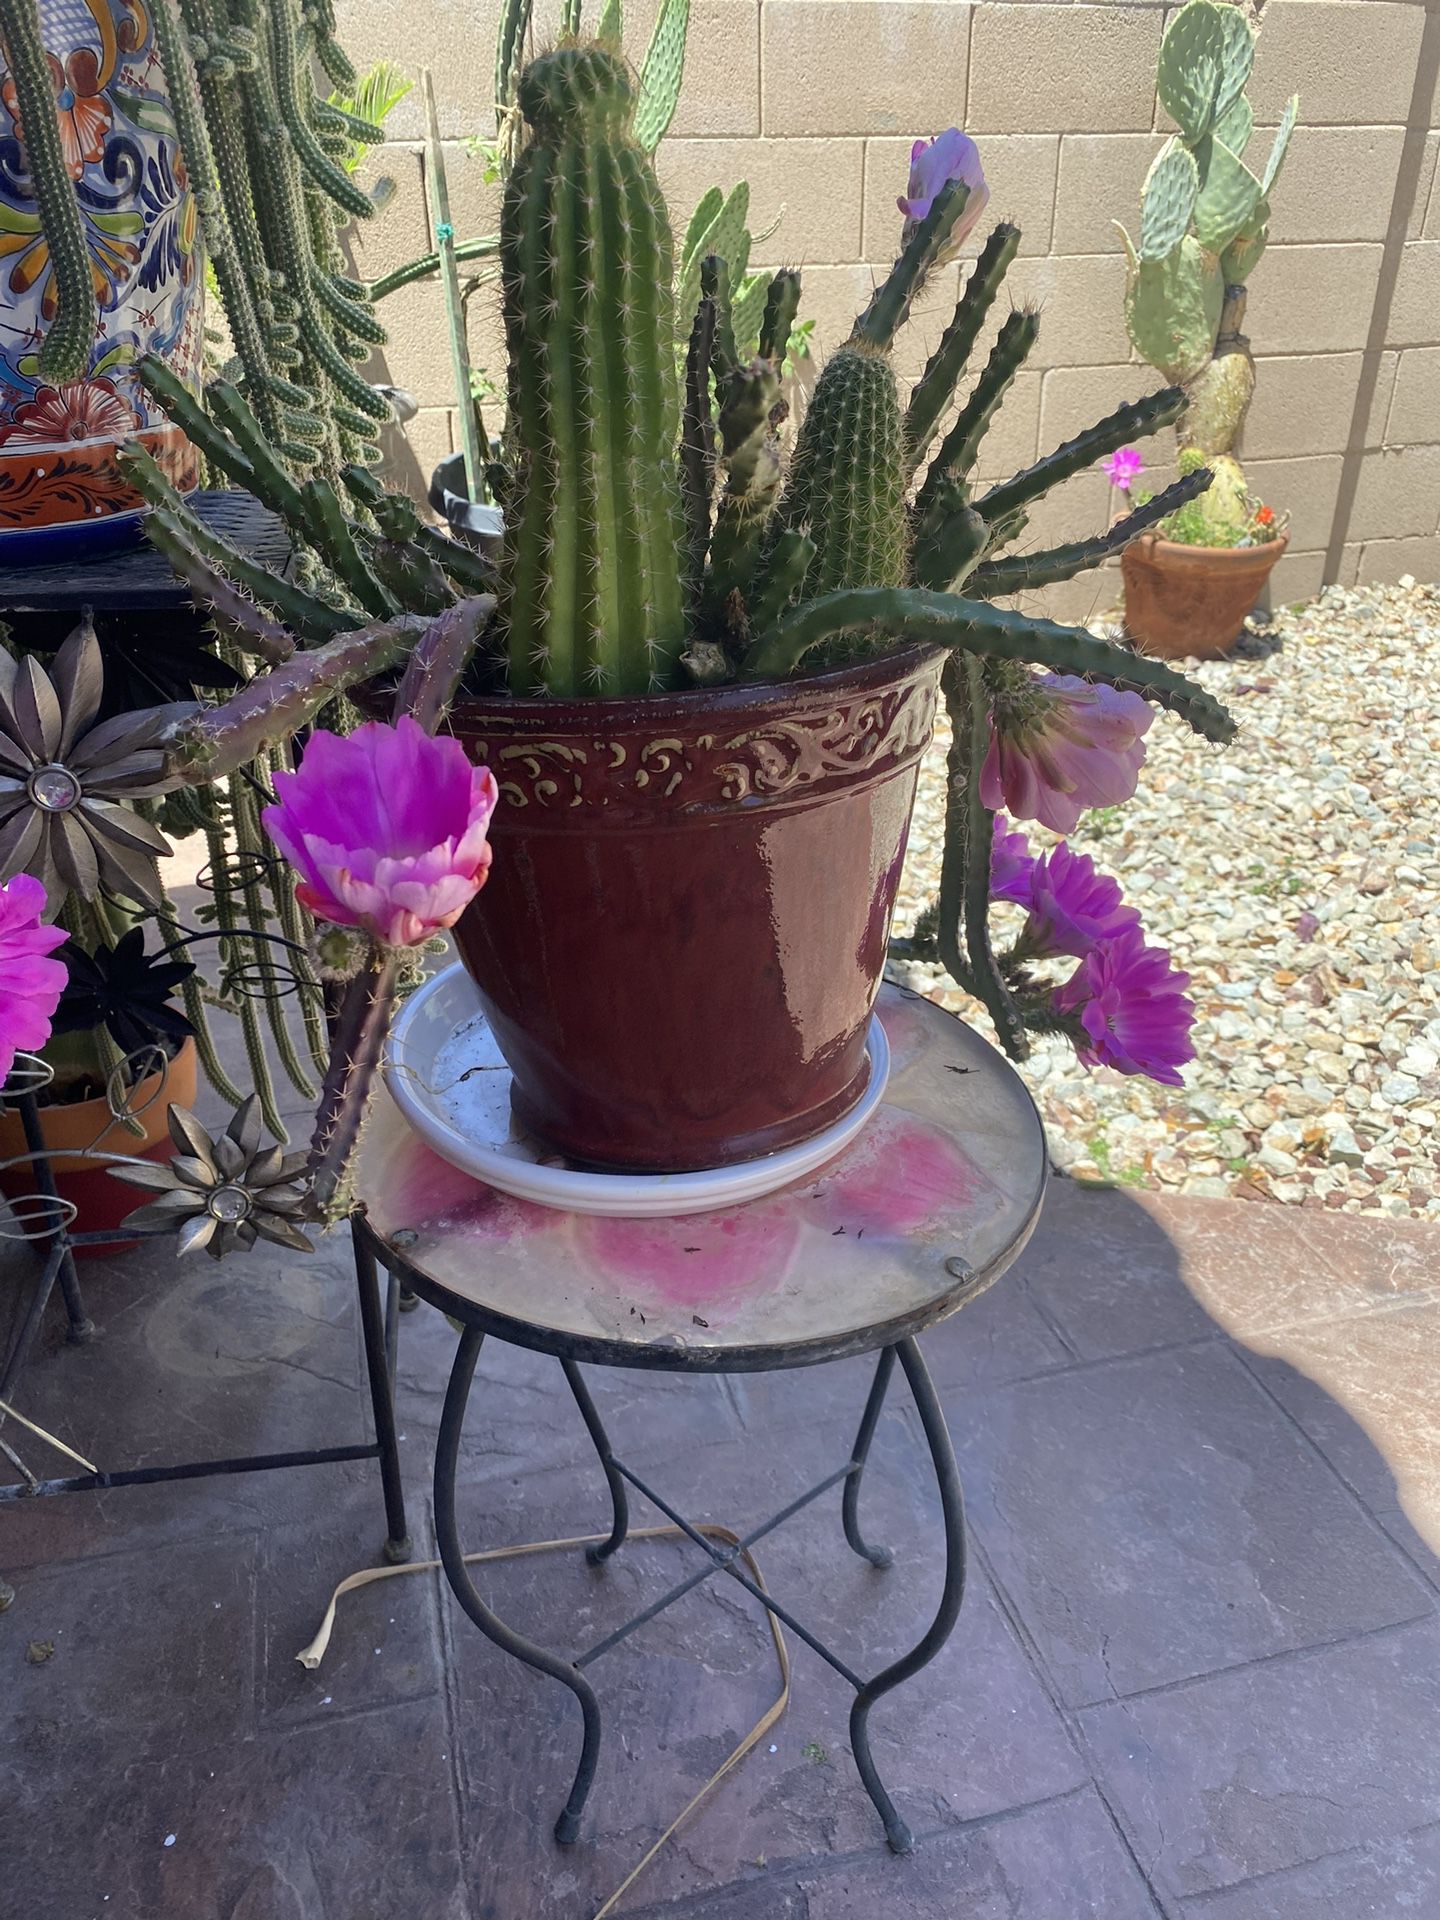 Cactus Plants